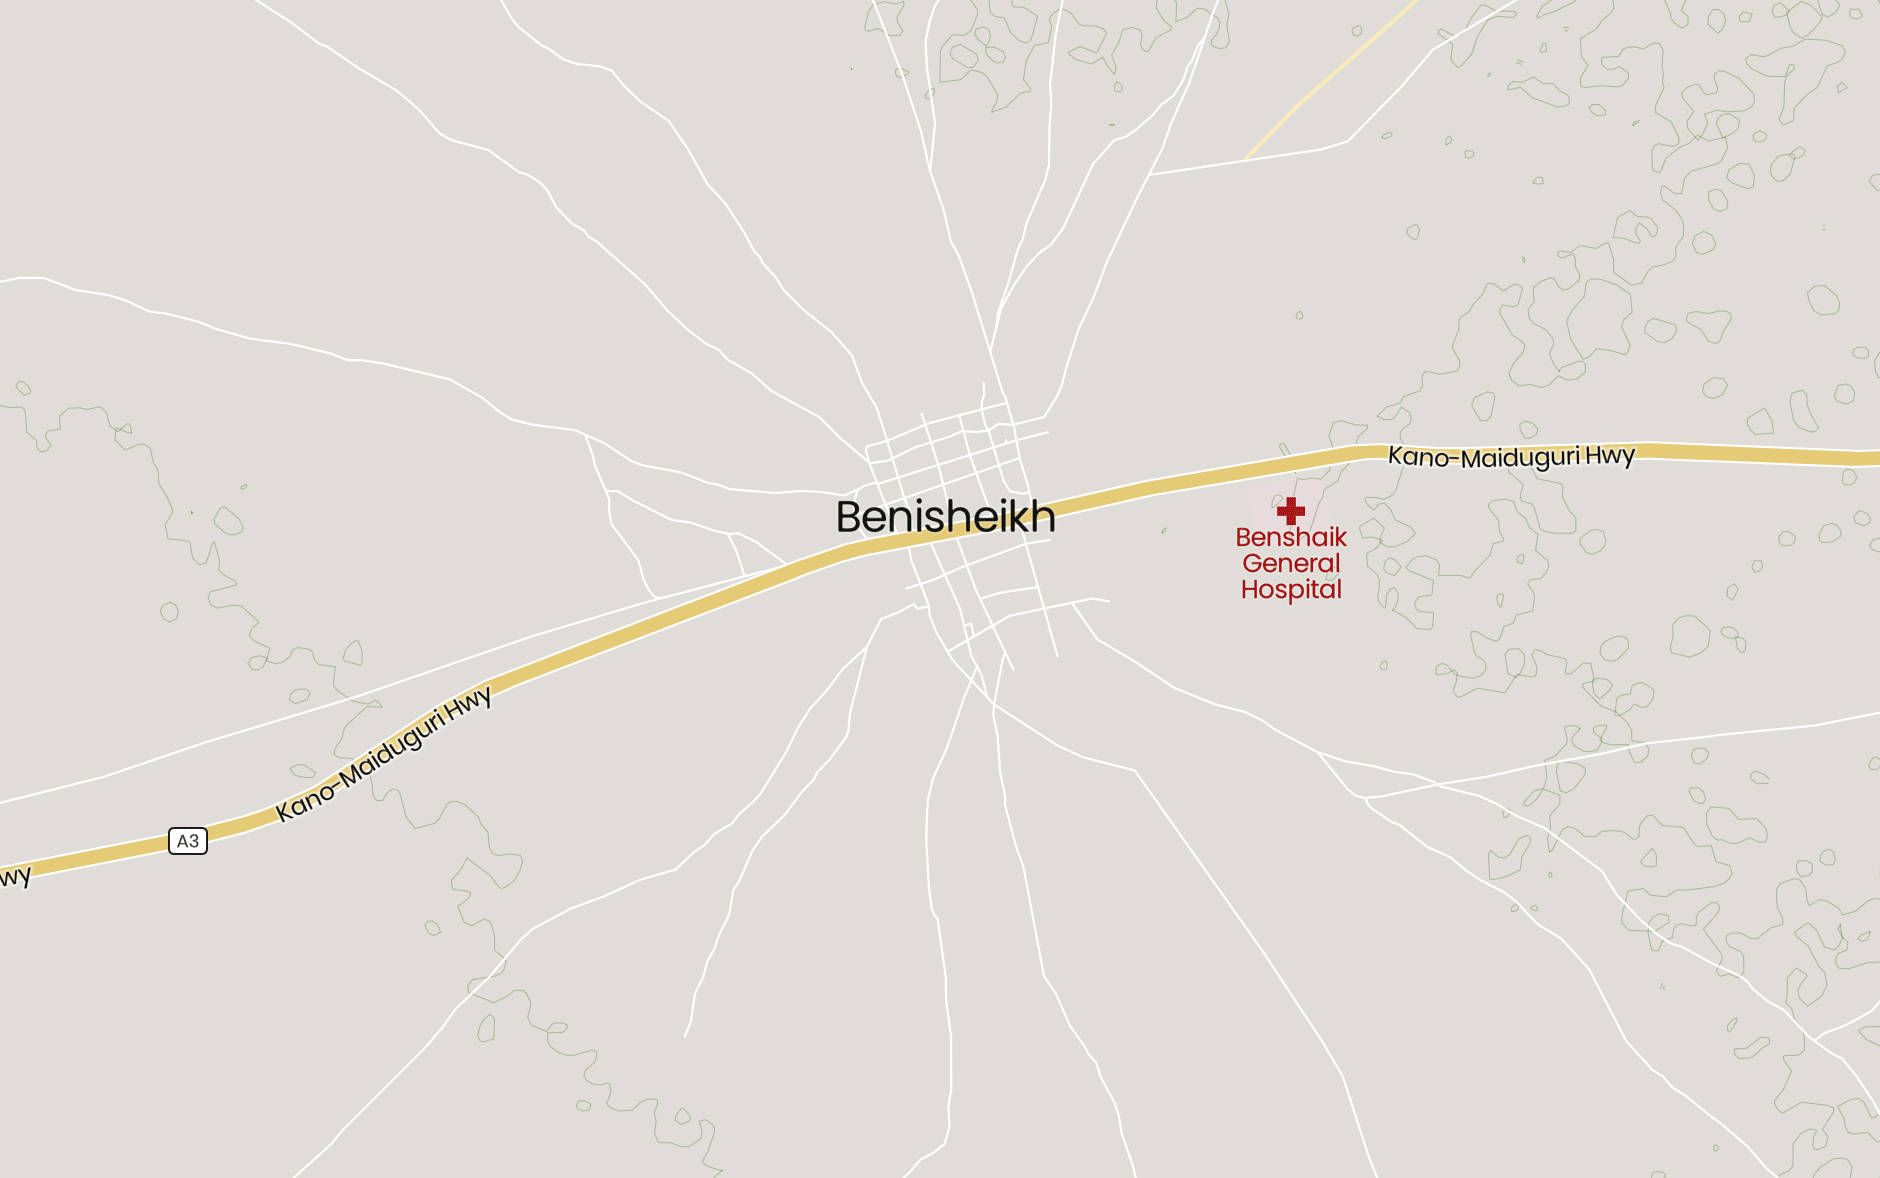 Benisheikh, Kaga LGA, Borno State, Nigeria